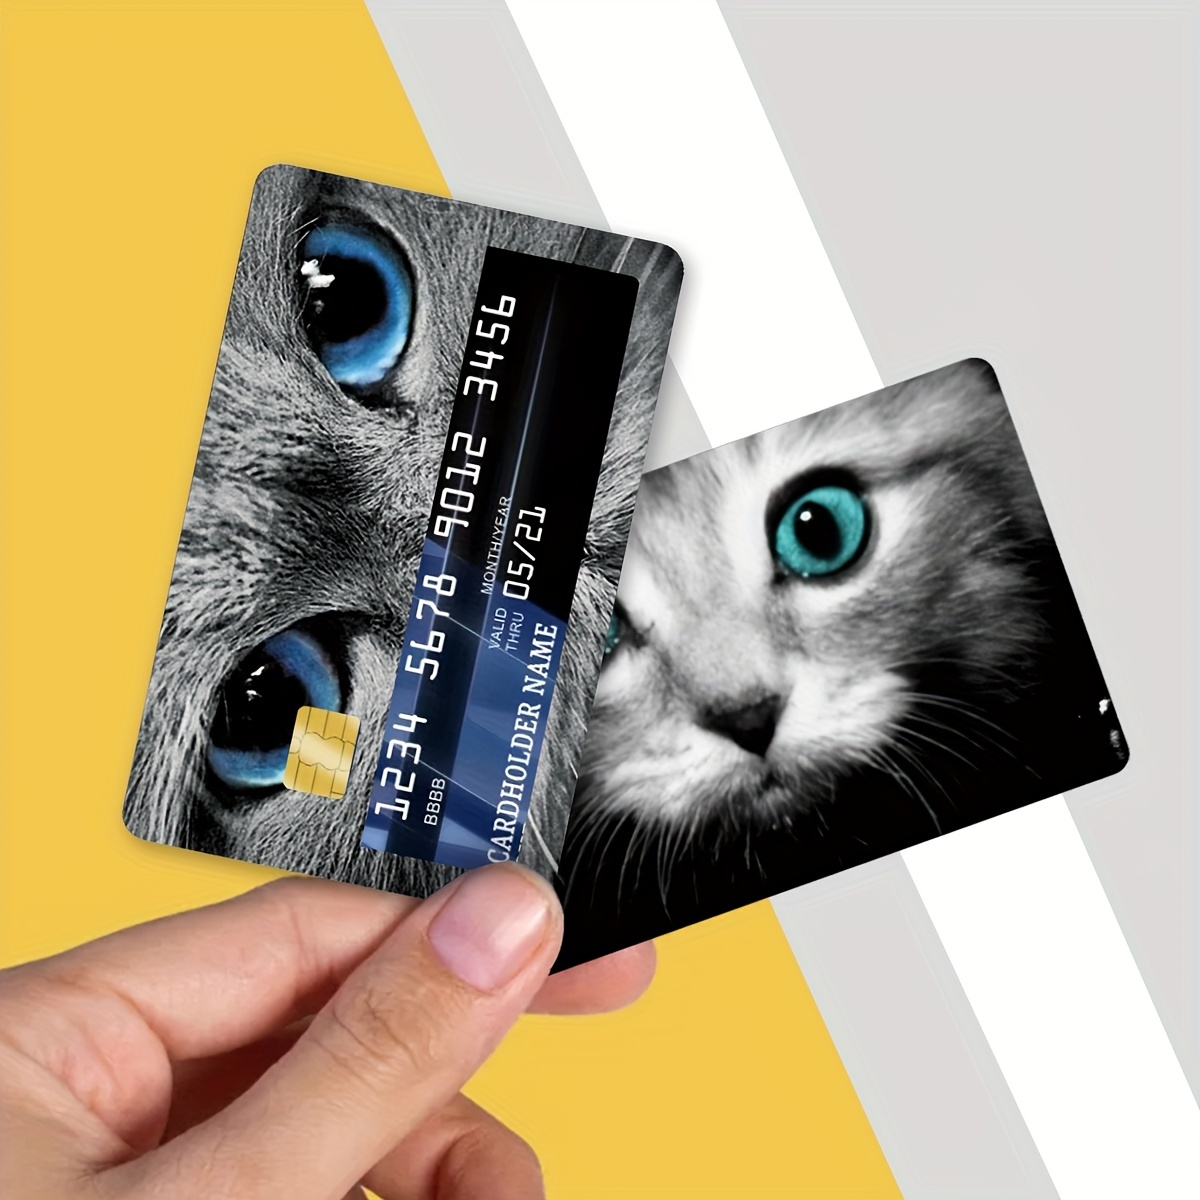 Halloween Gifts Horror Movie Credit Card Skin Stickers Slim Debit Card,  Bank Card, Credit Card Sticker Halloween Card